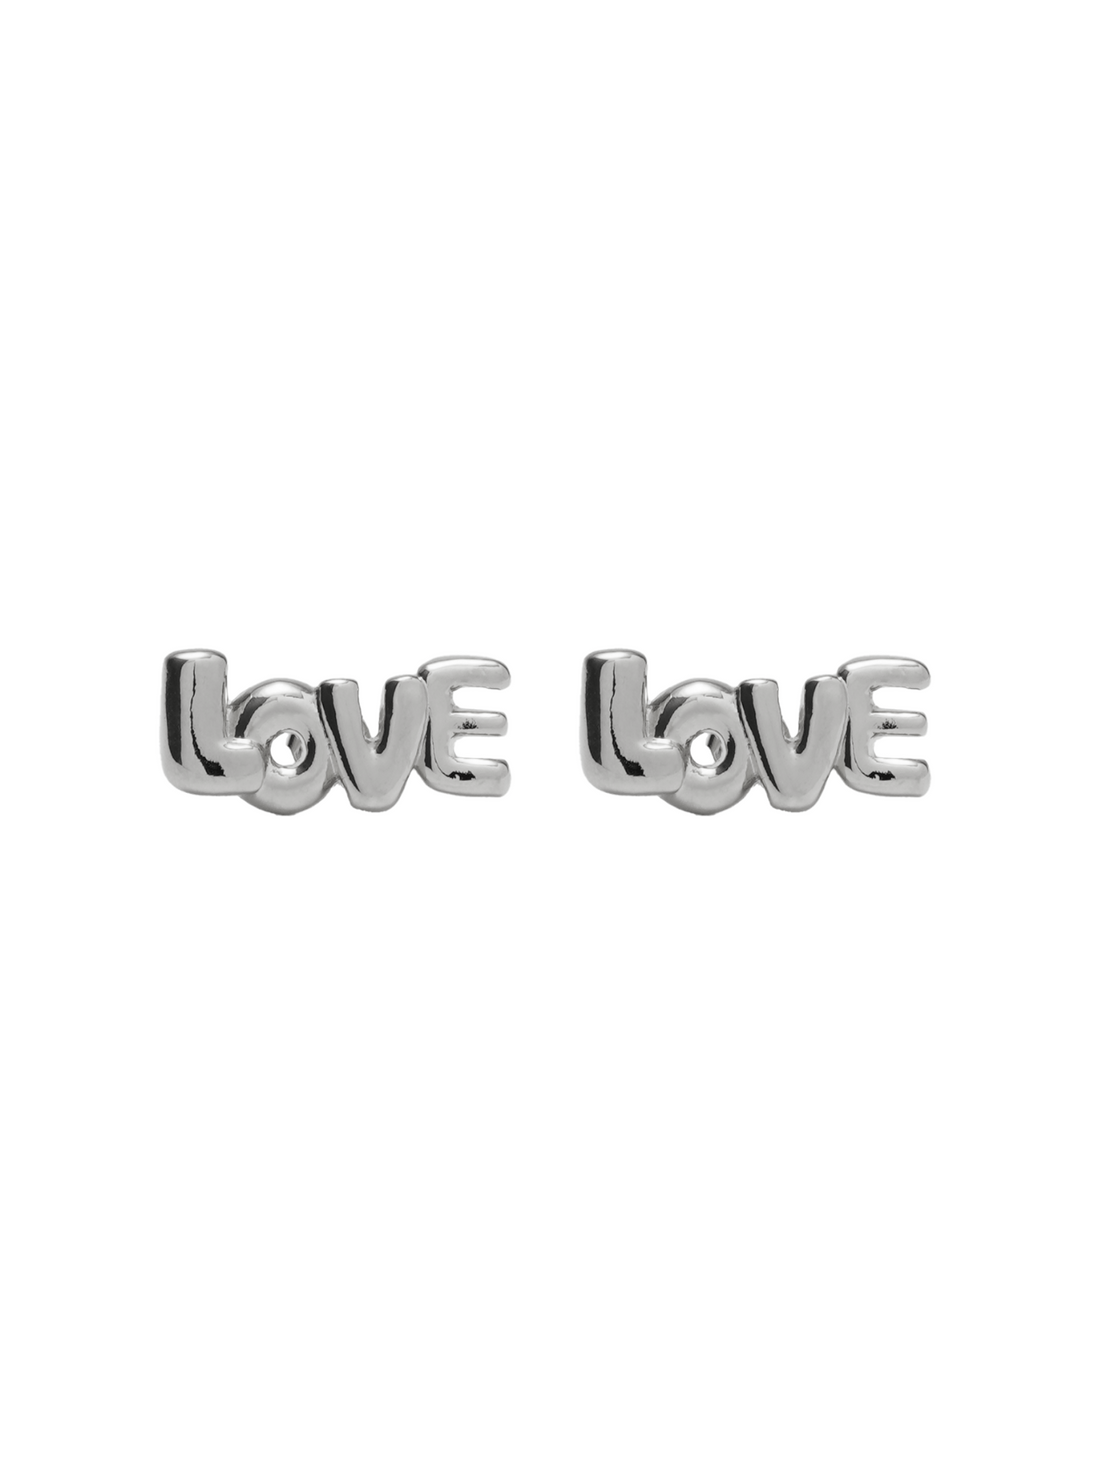 Message pierce "LOVE"